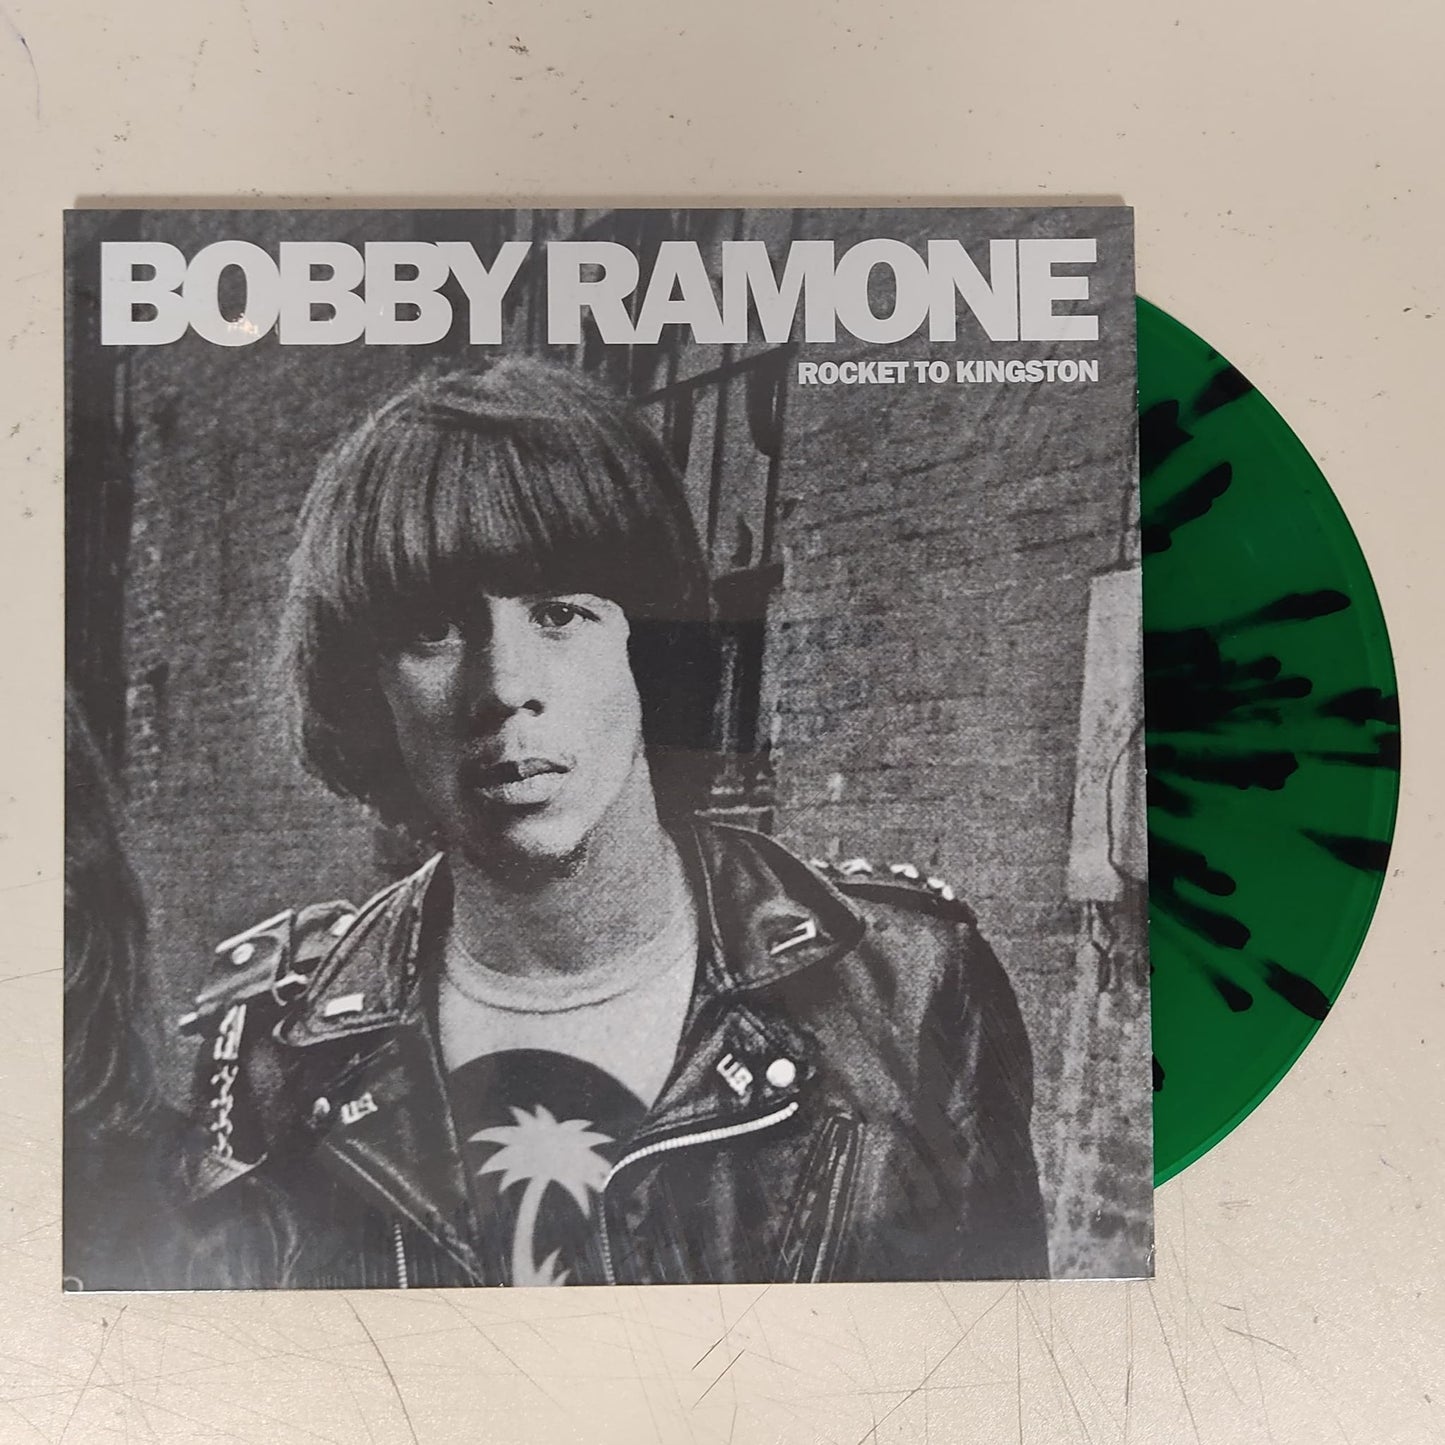 BOBBY RAMONE "Rocket to Kingston" SPLATTER LP